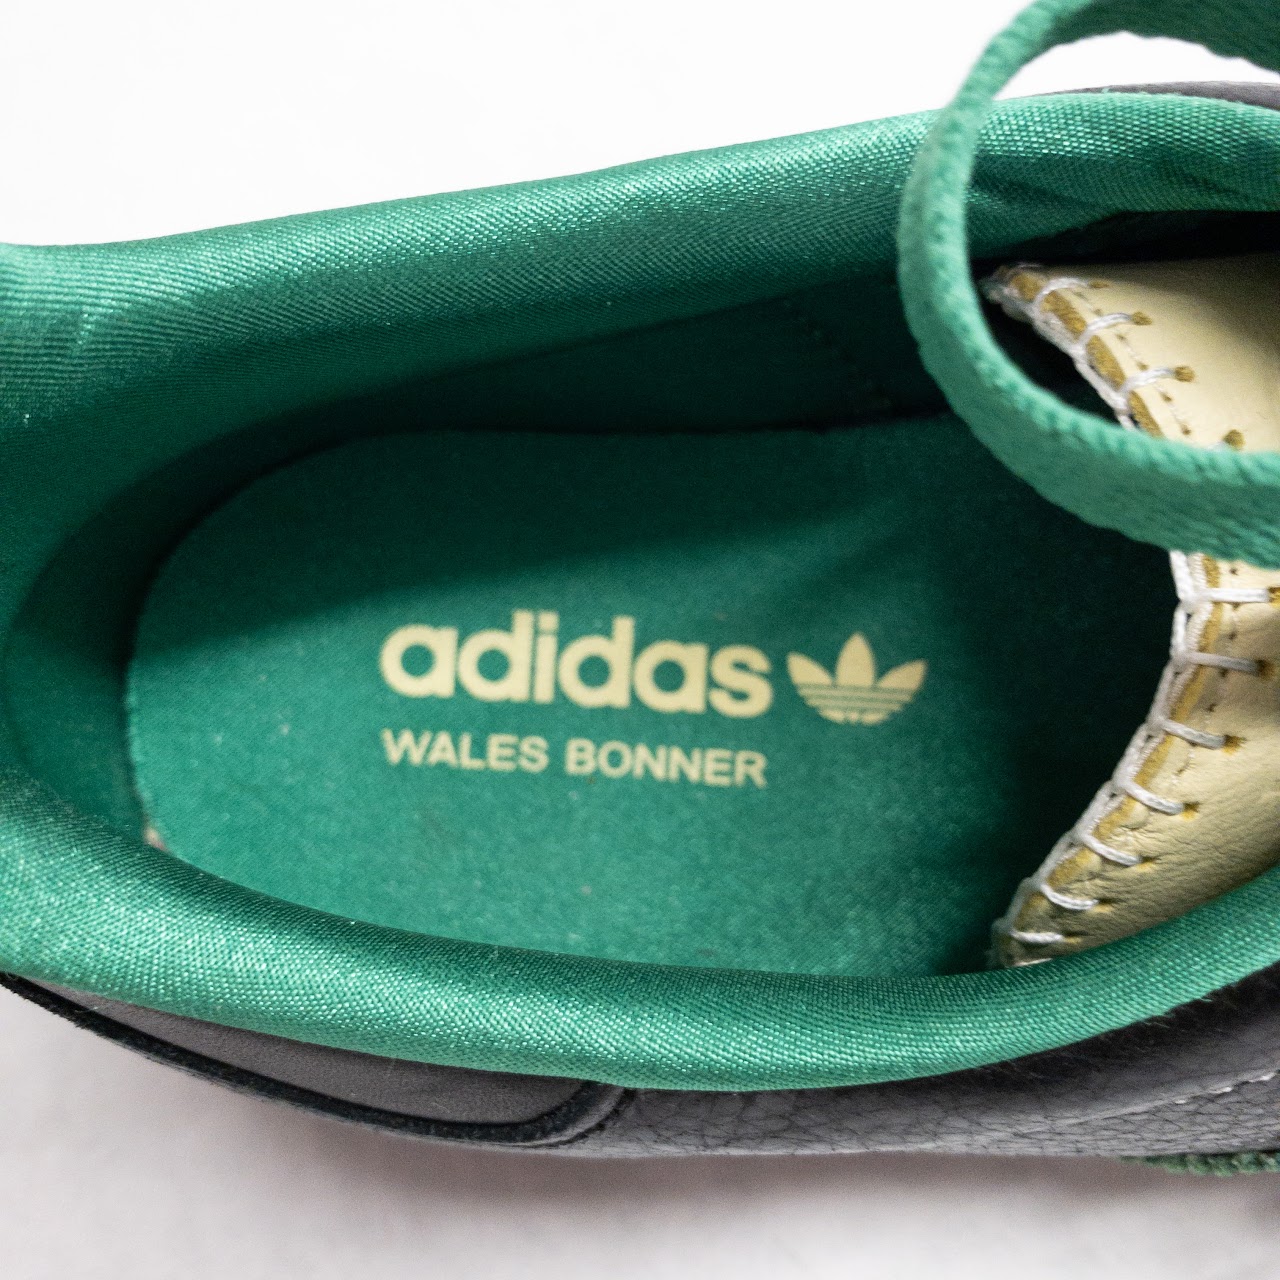 Wales Bonner x Adidas Black Samba Sneakers